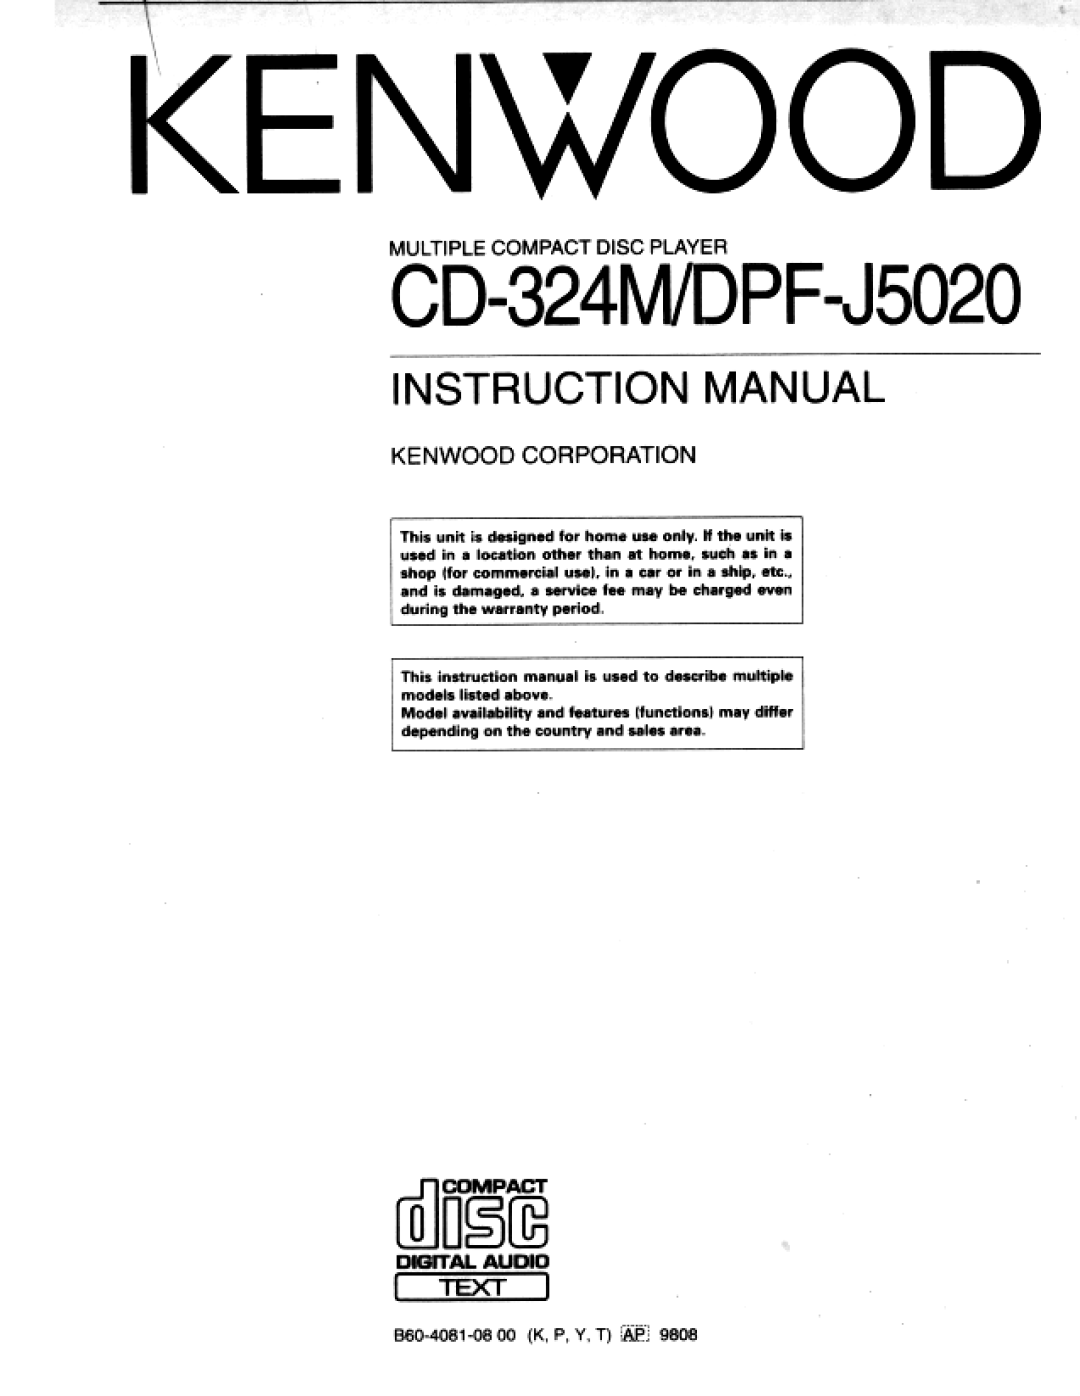 Kenwood CD-324M, DPF-J5020 manual 